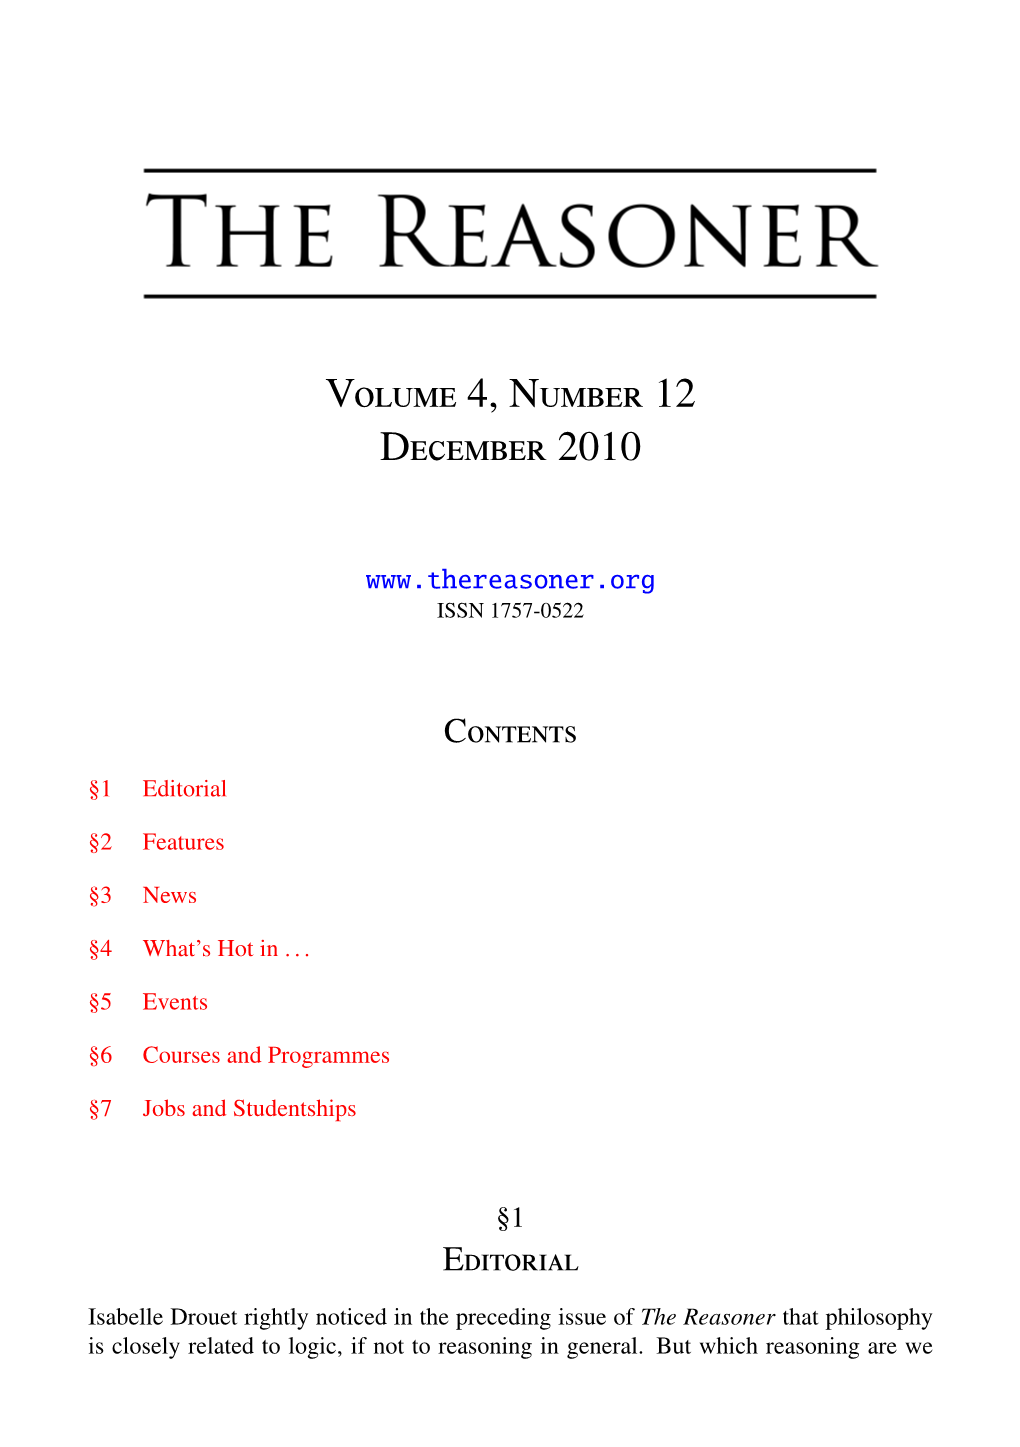 Volume 4, Number 12 (Optimised for Screen Readers)